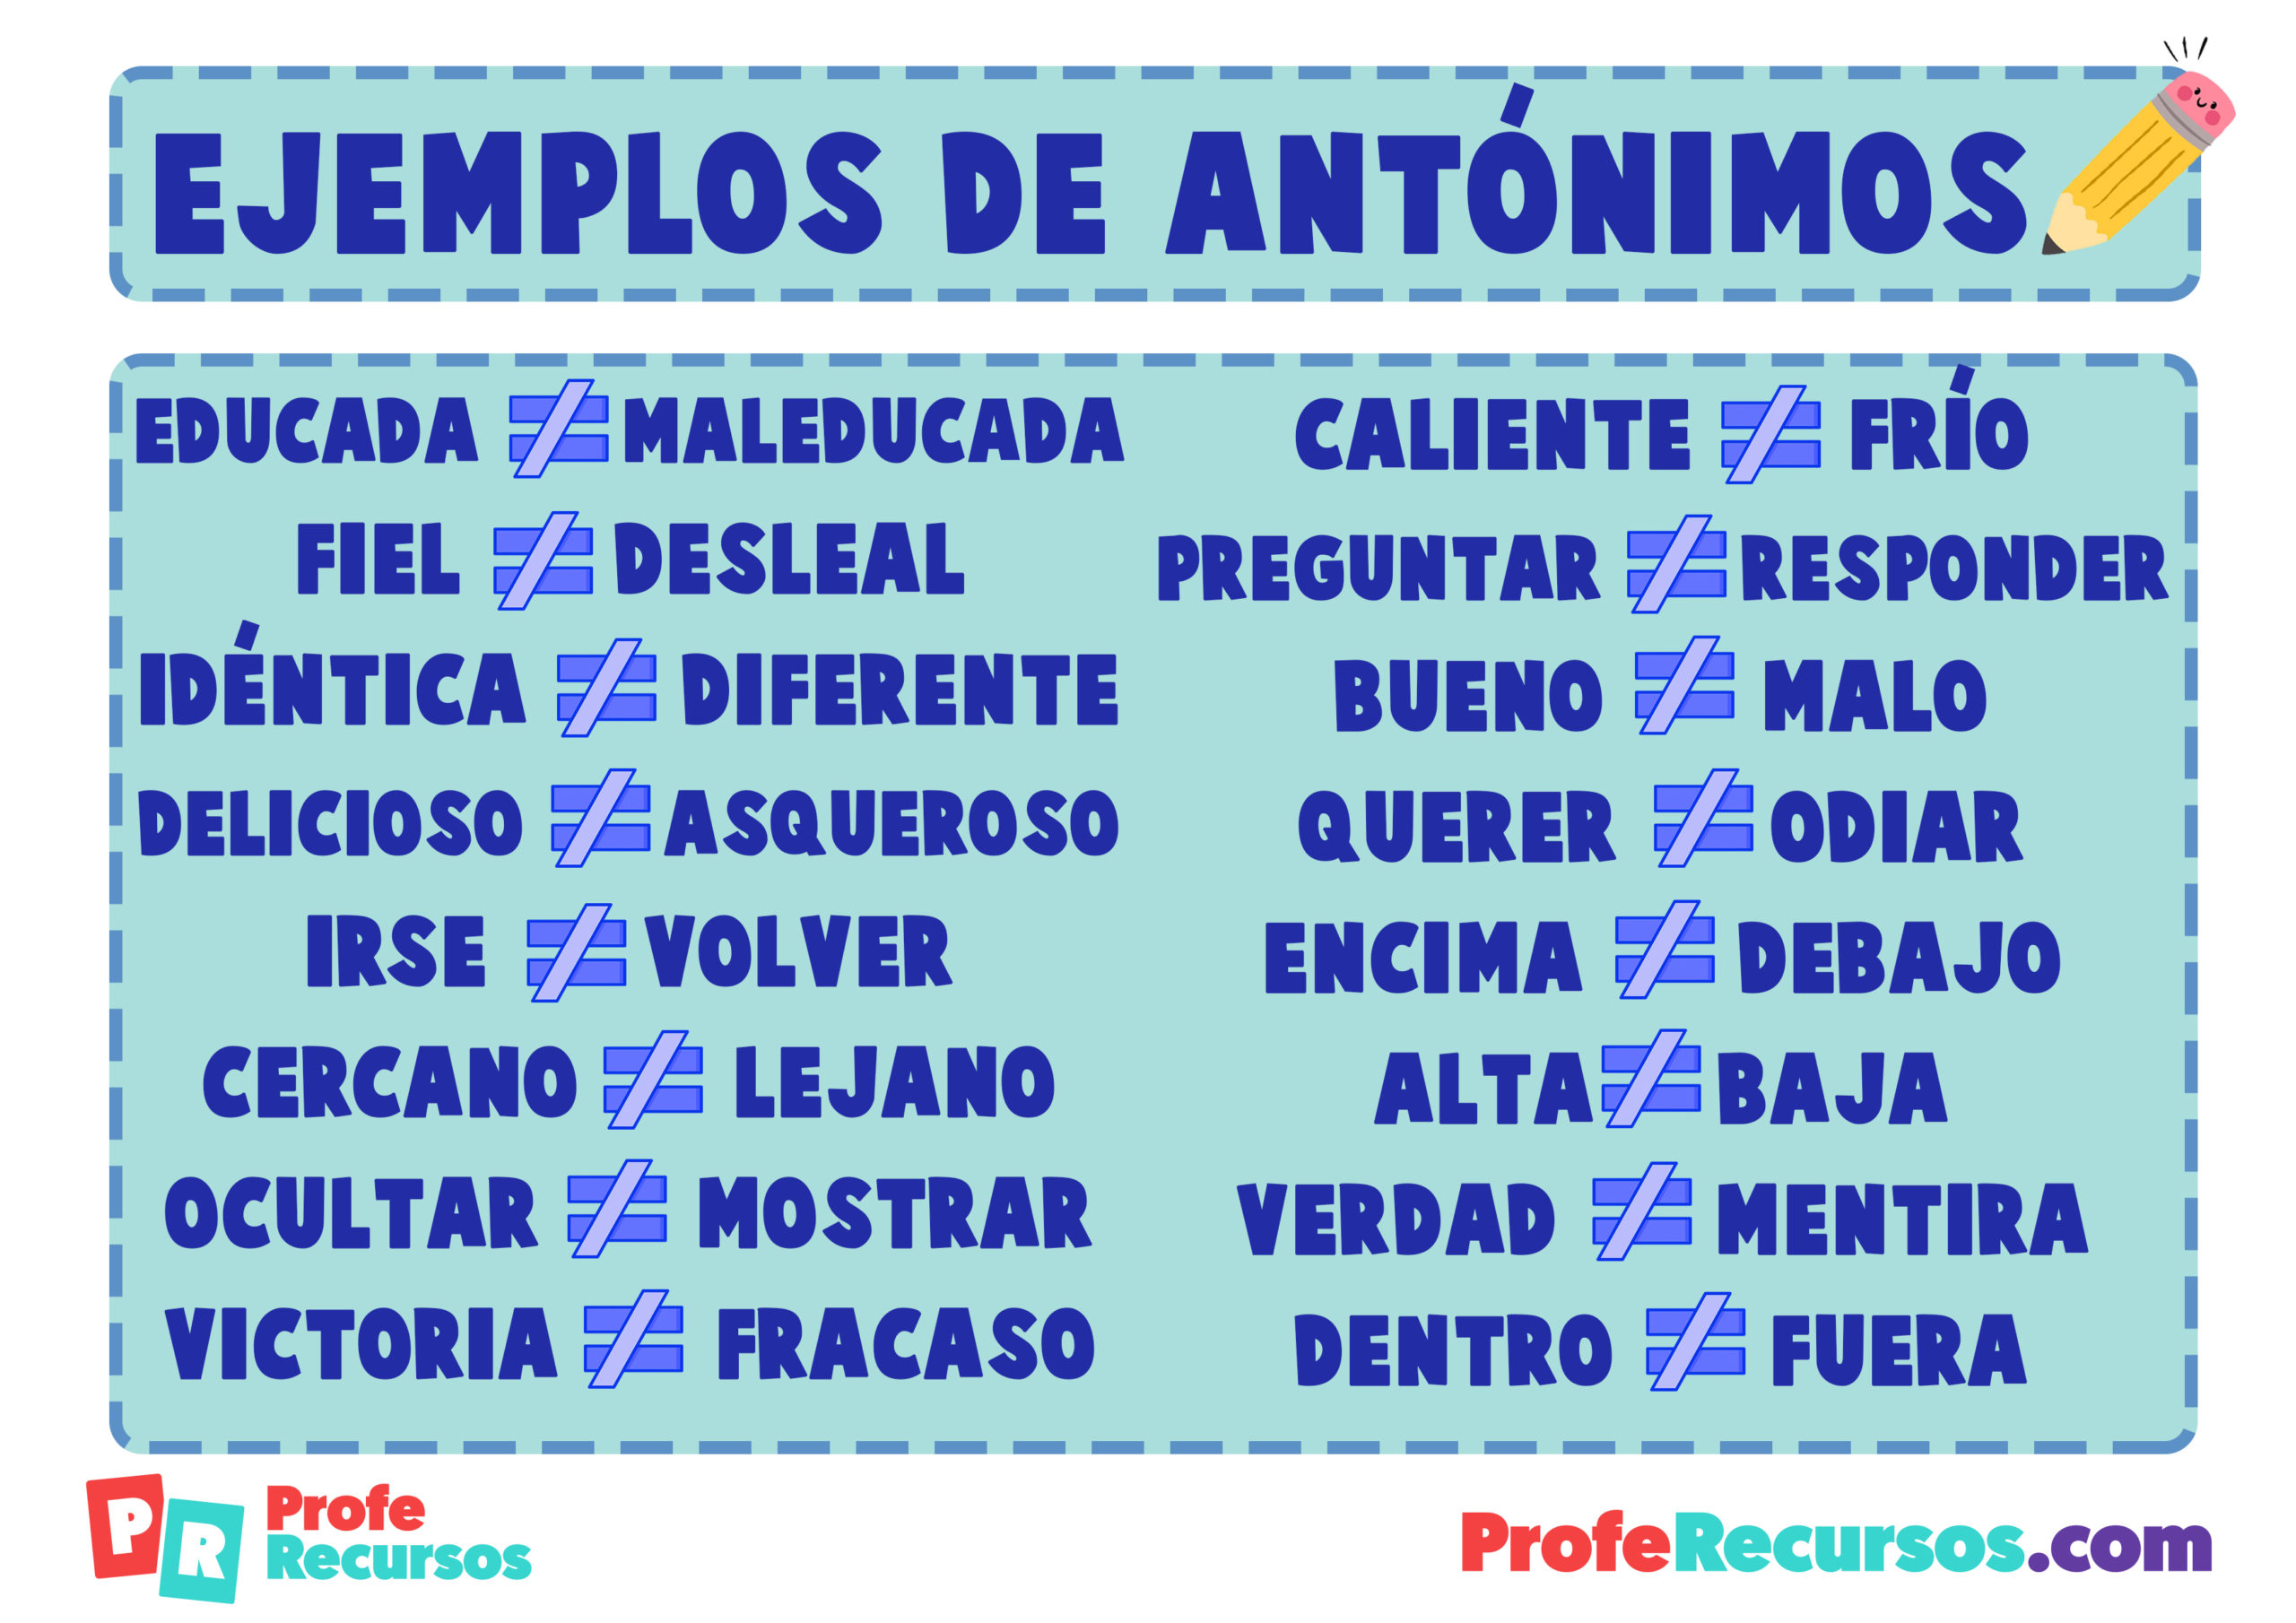 Antonimos4